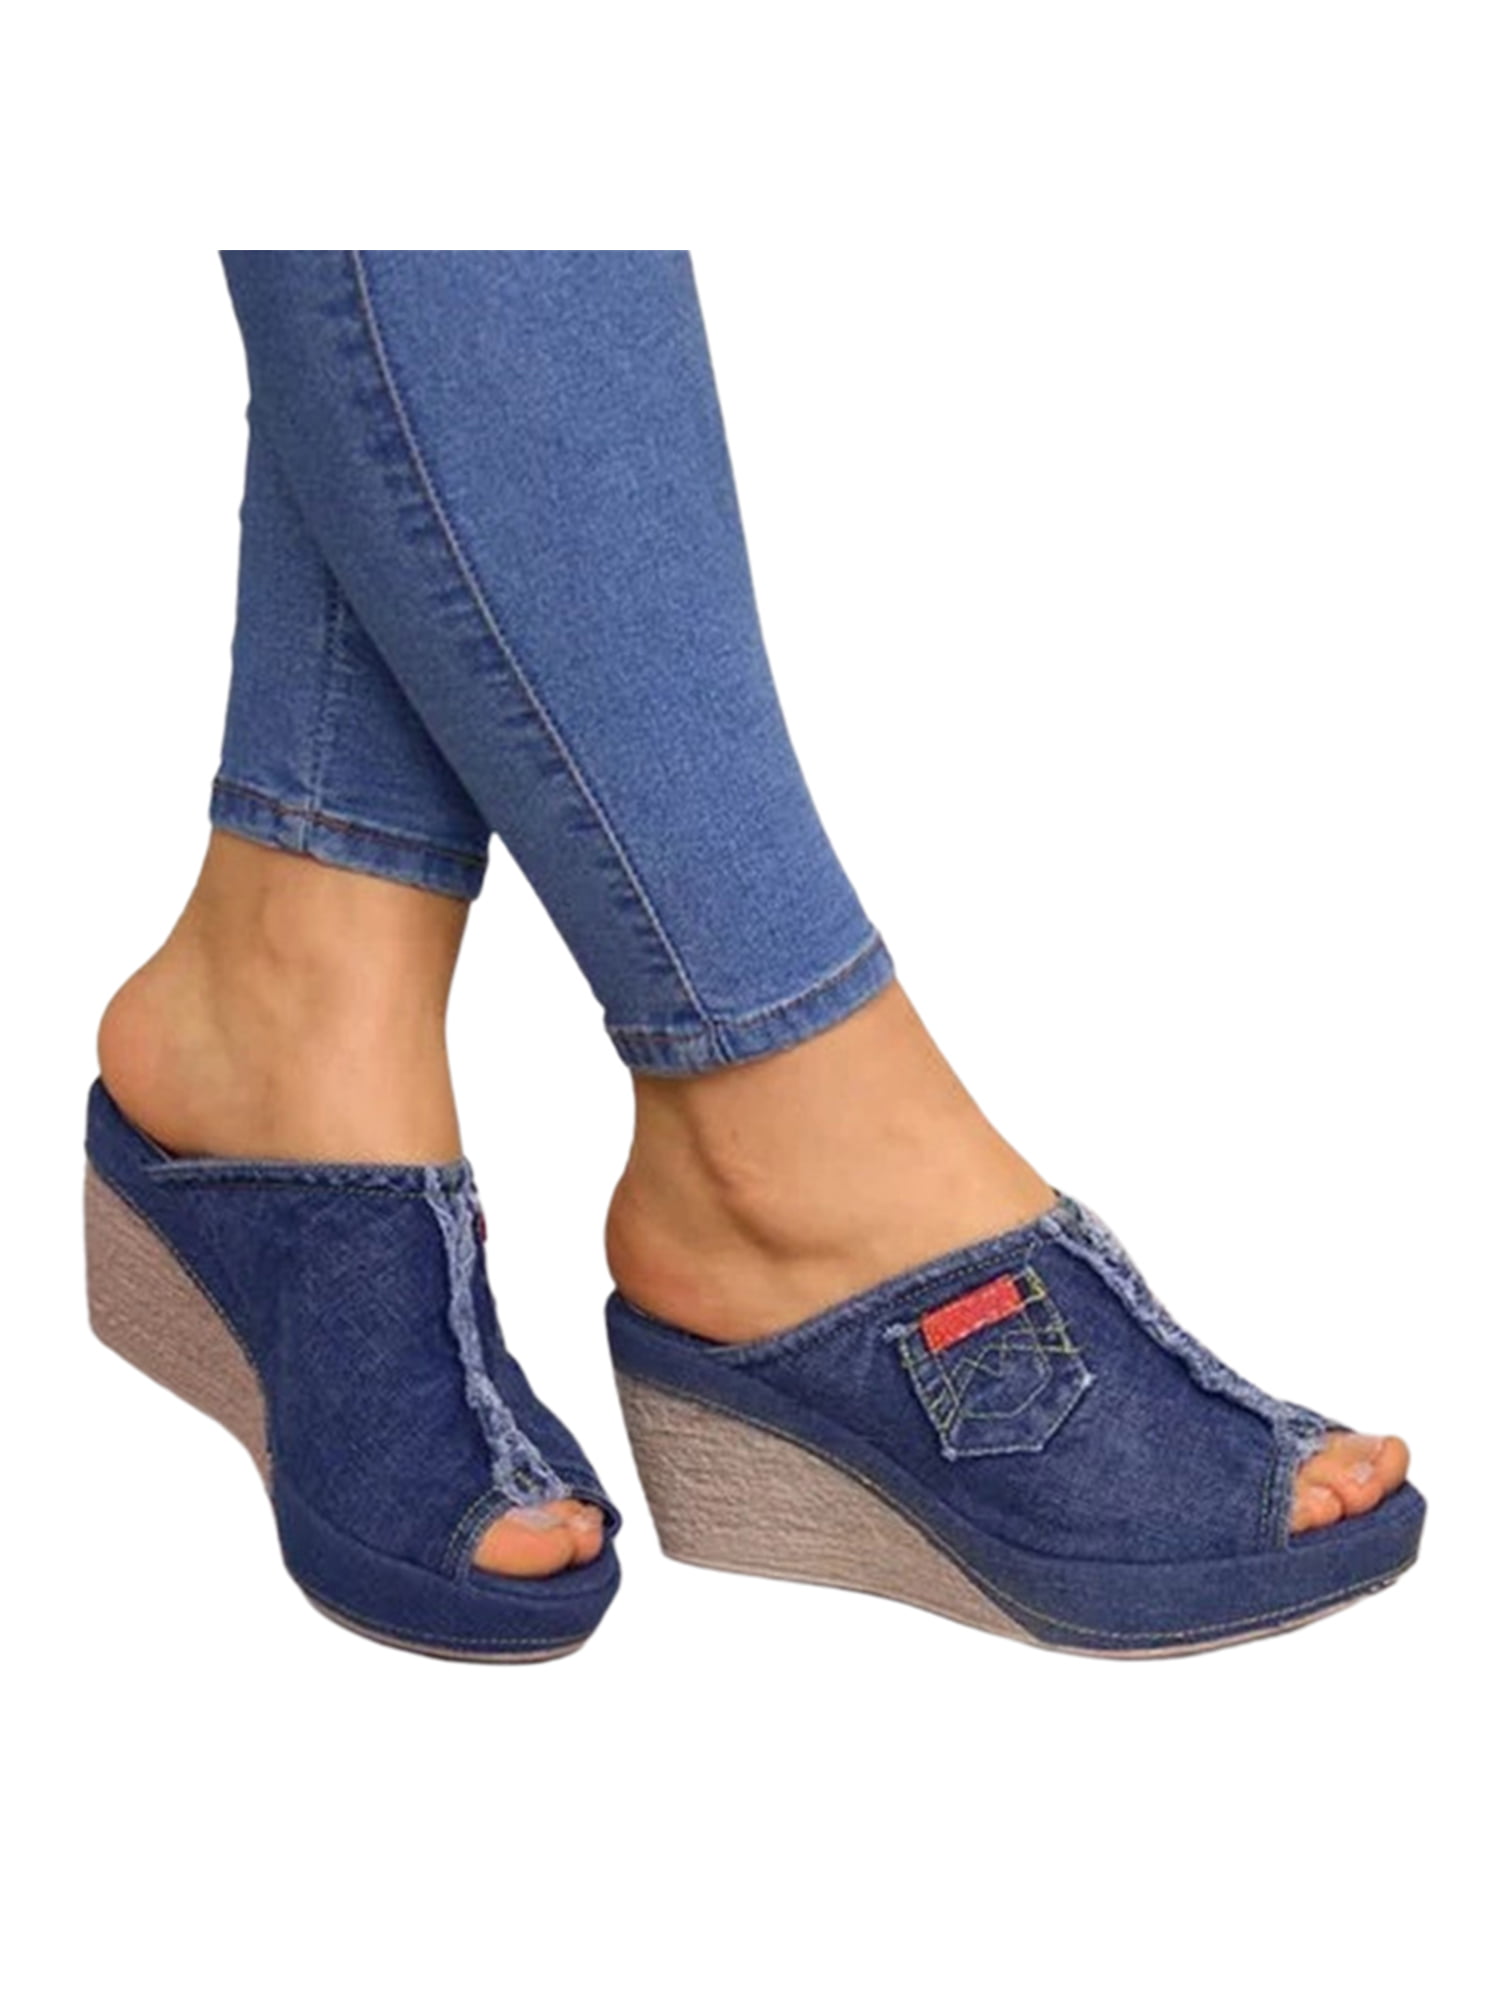 New Womens Flatform Sliders Mule Summer Sandals Espadrille Slip On Shoes Sizes 